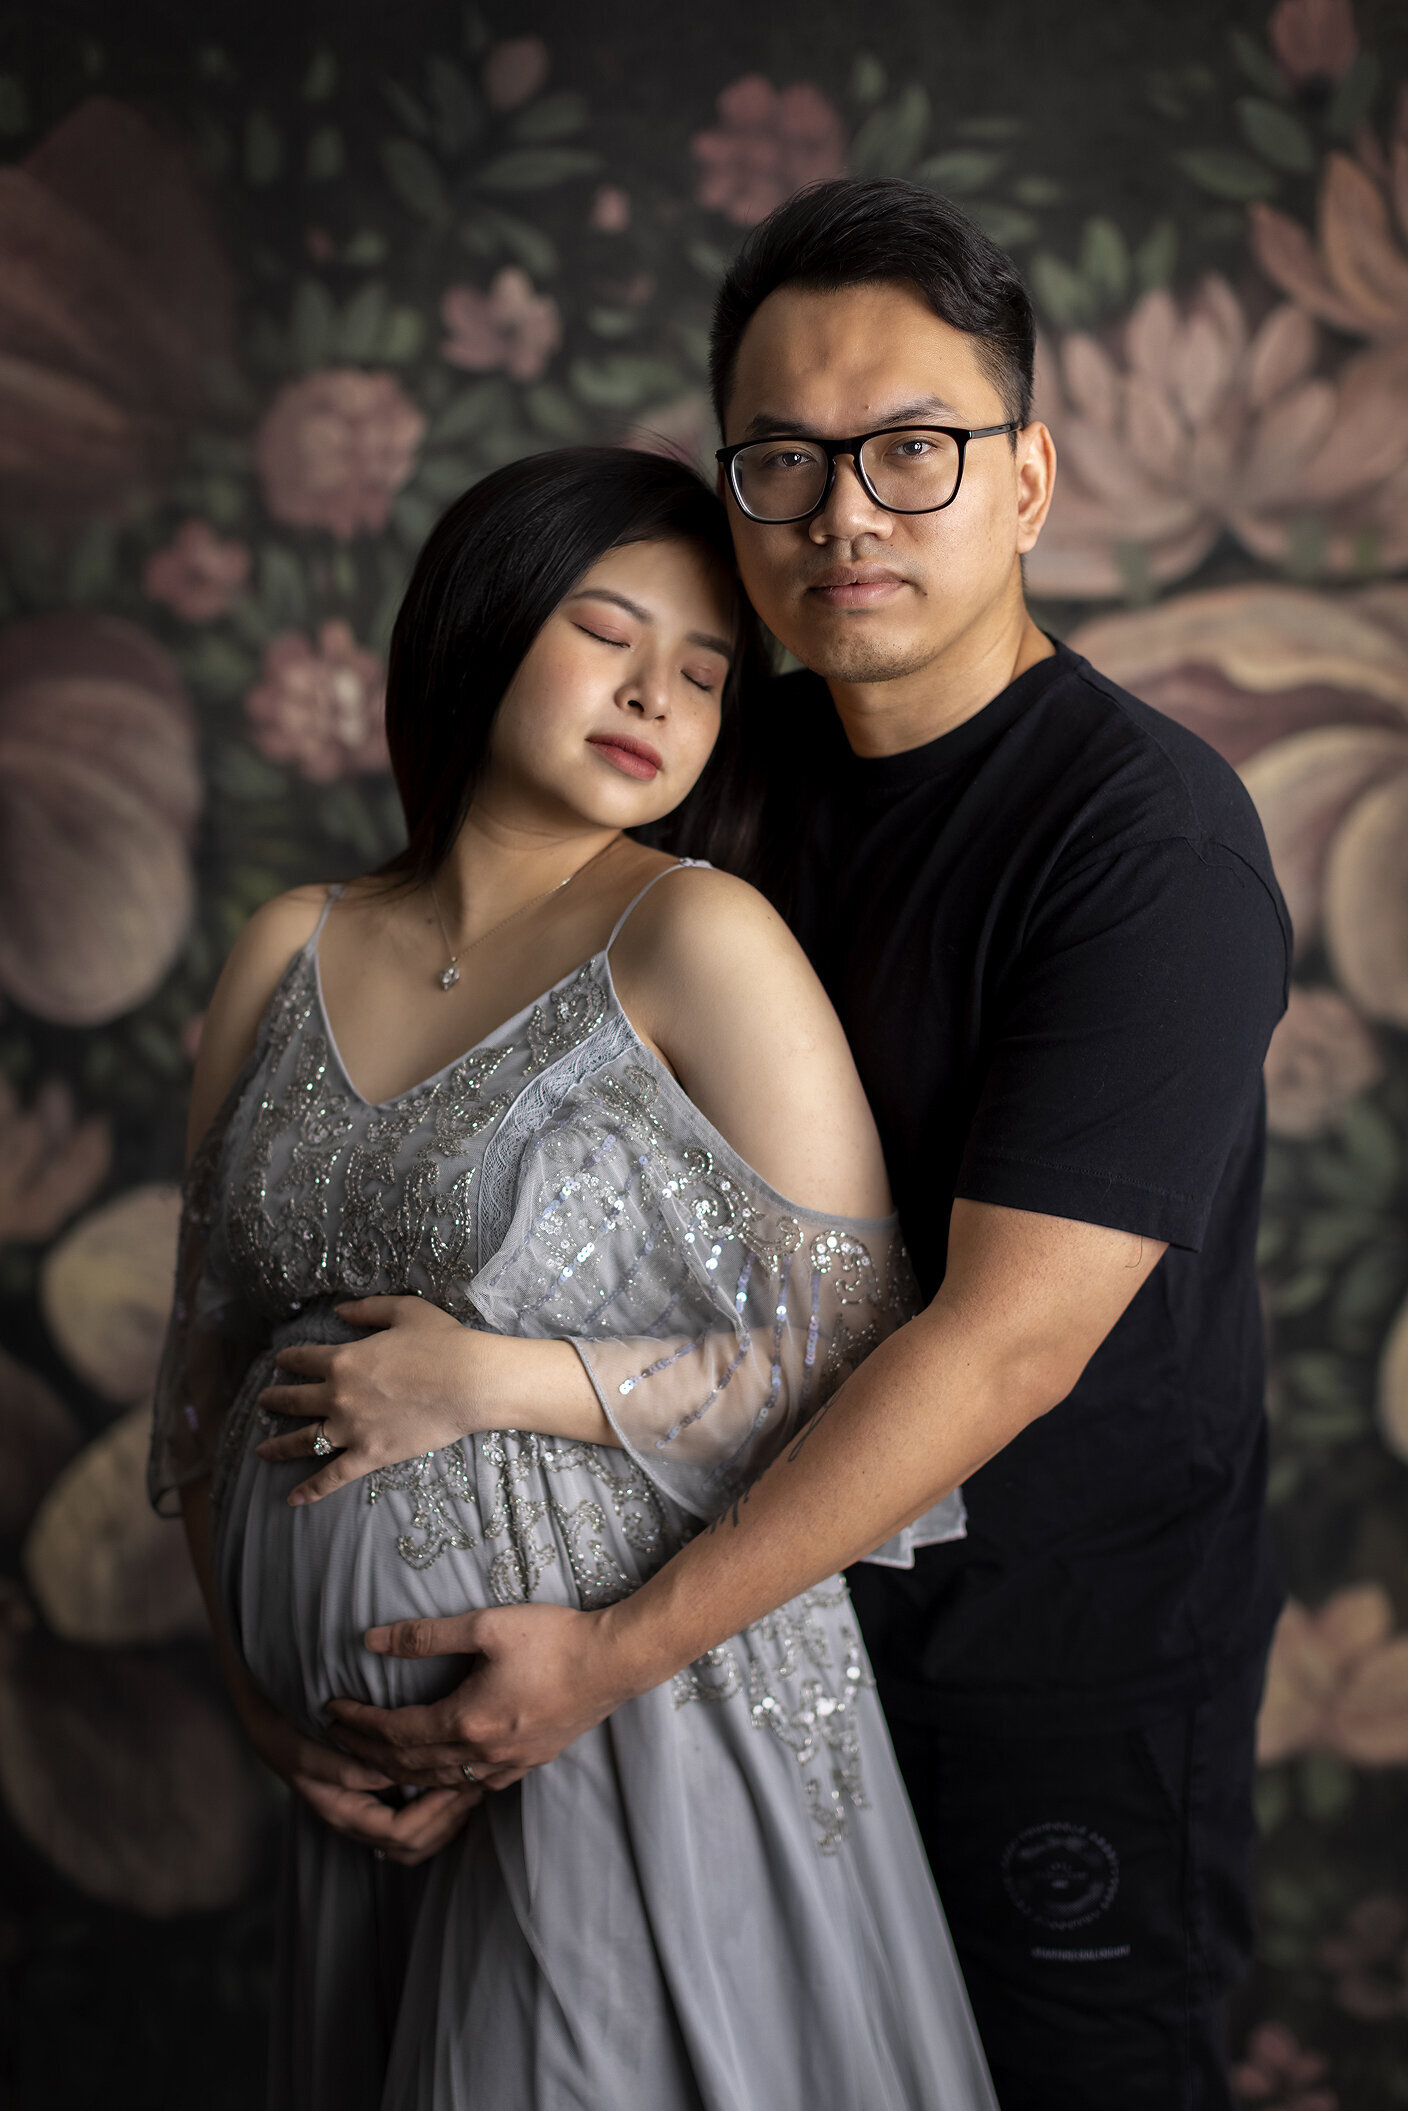 Couple at Dallas maternity photoshoot.